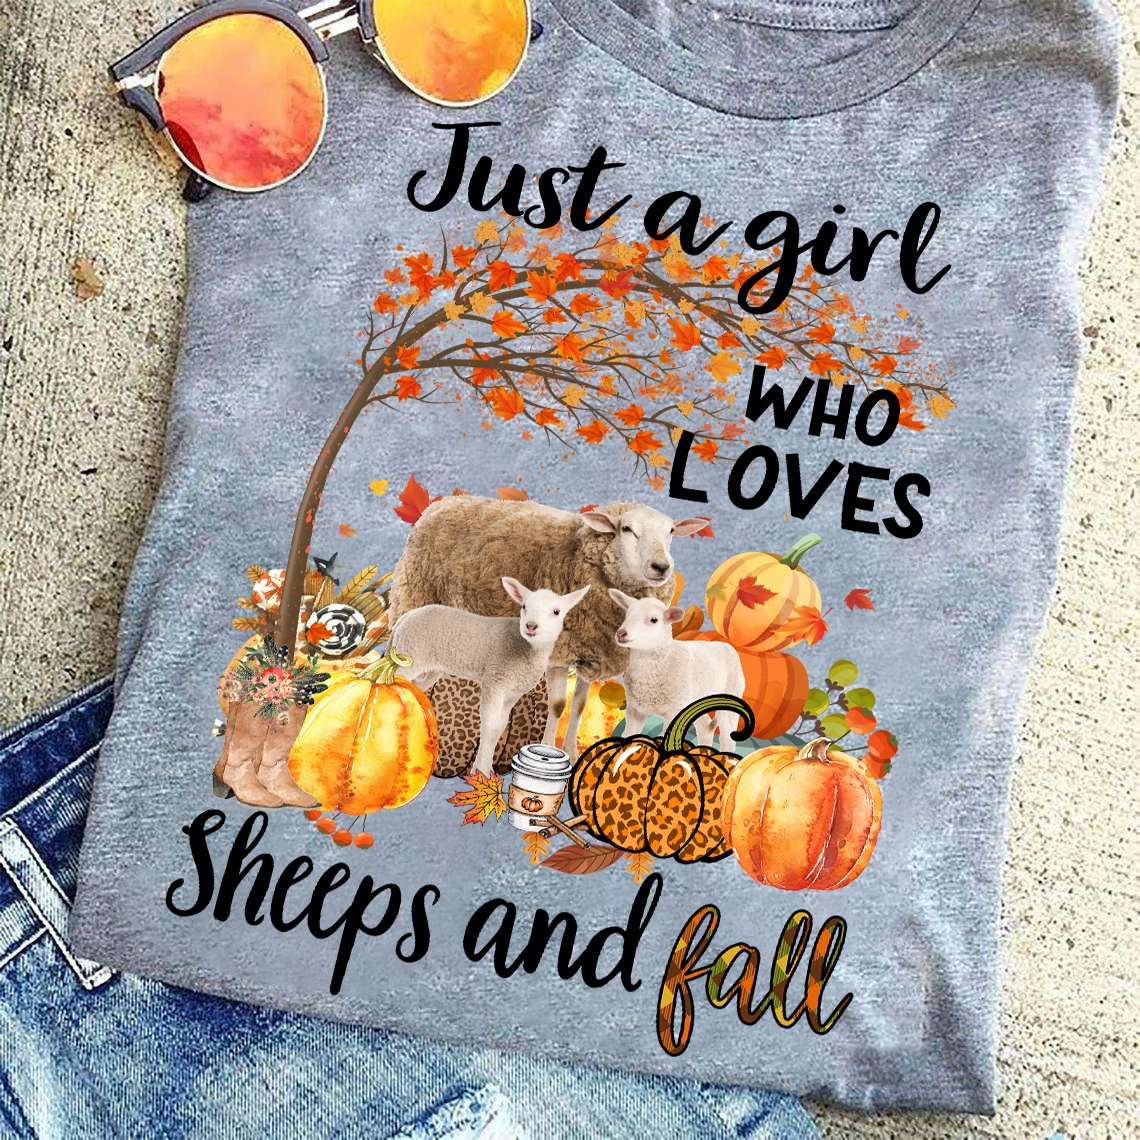 Just a girl who loves sheep and fall - Fall the wonderful season, sheep and pumpkin